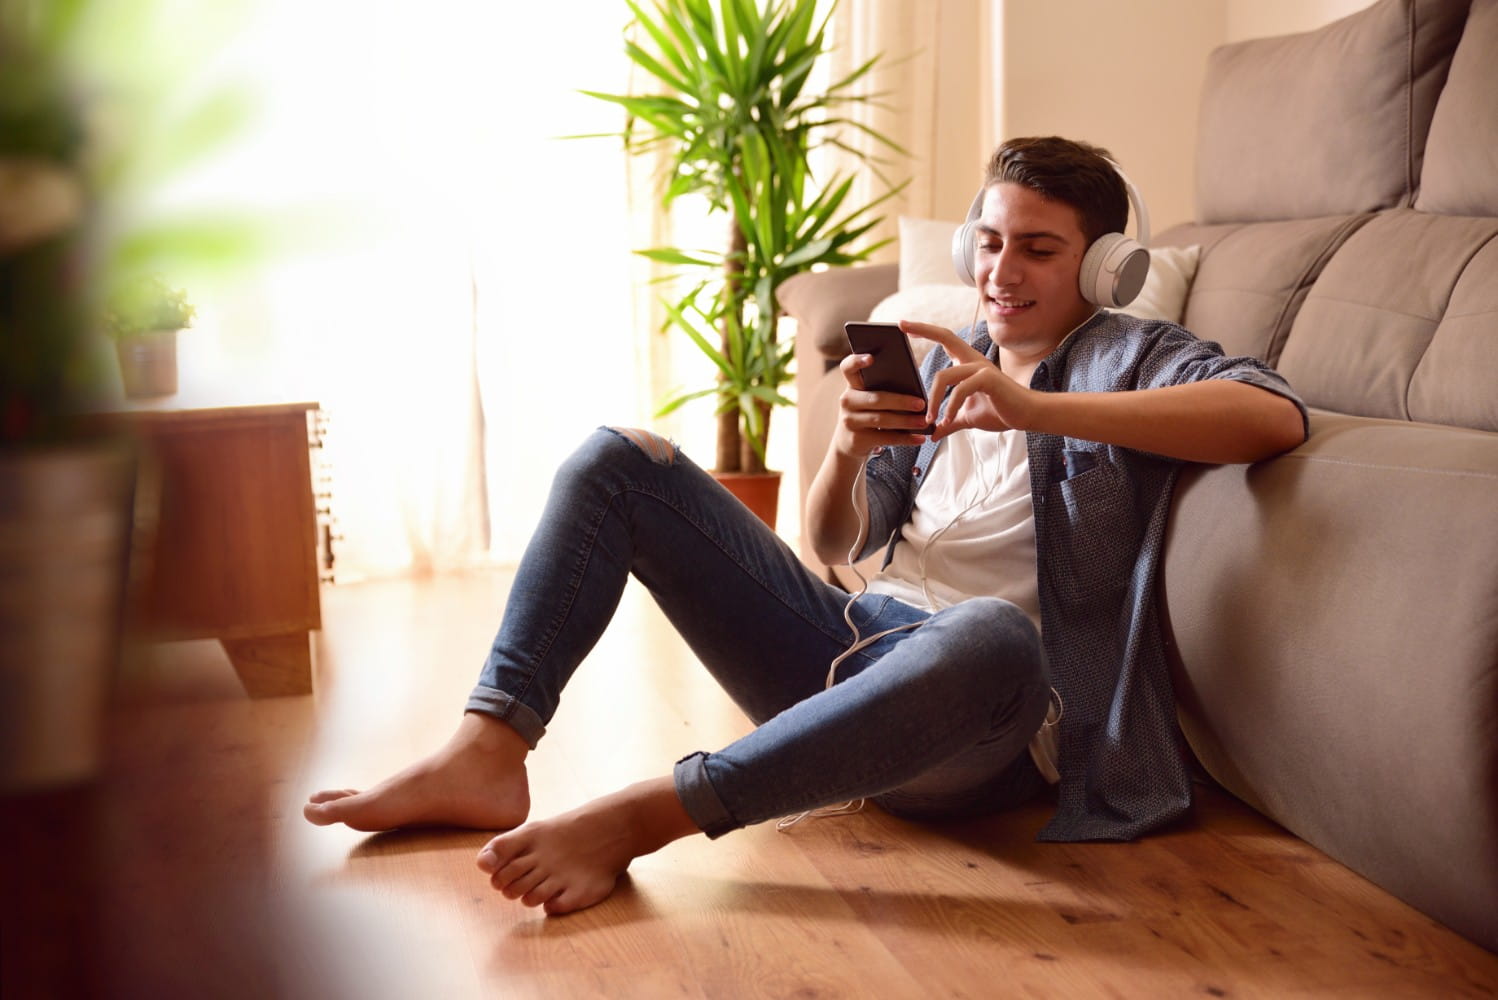 Teen sitting on floor using a smartphone in living room